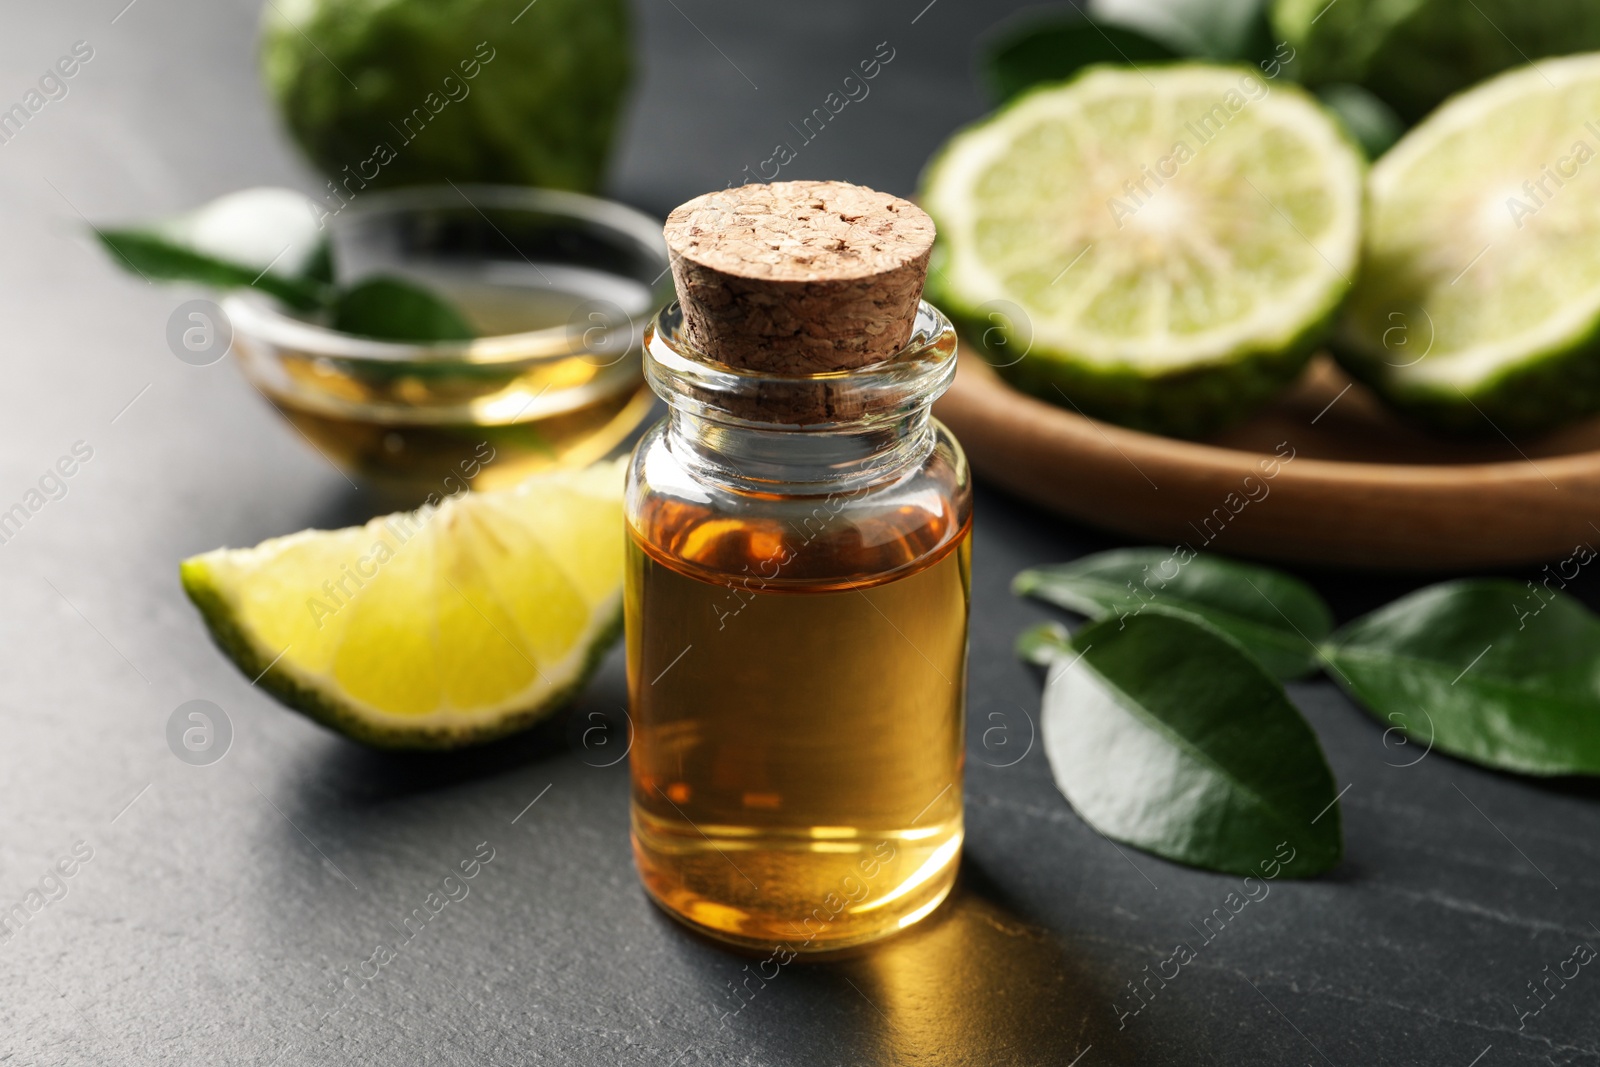 Photo of Bottle of bergamot essential oil on dark table, closeup